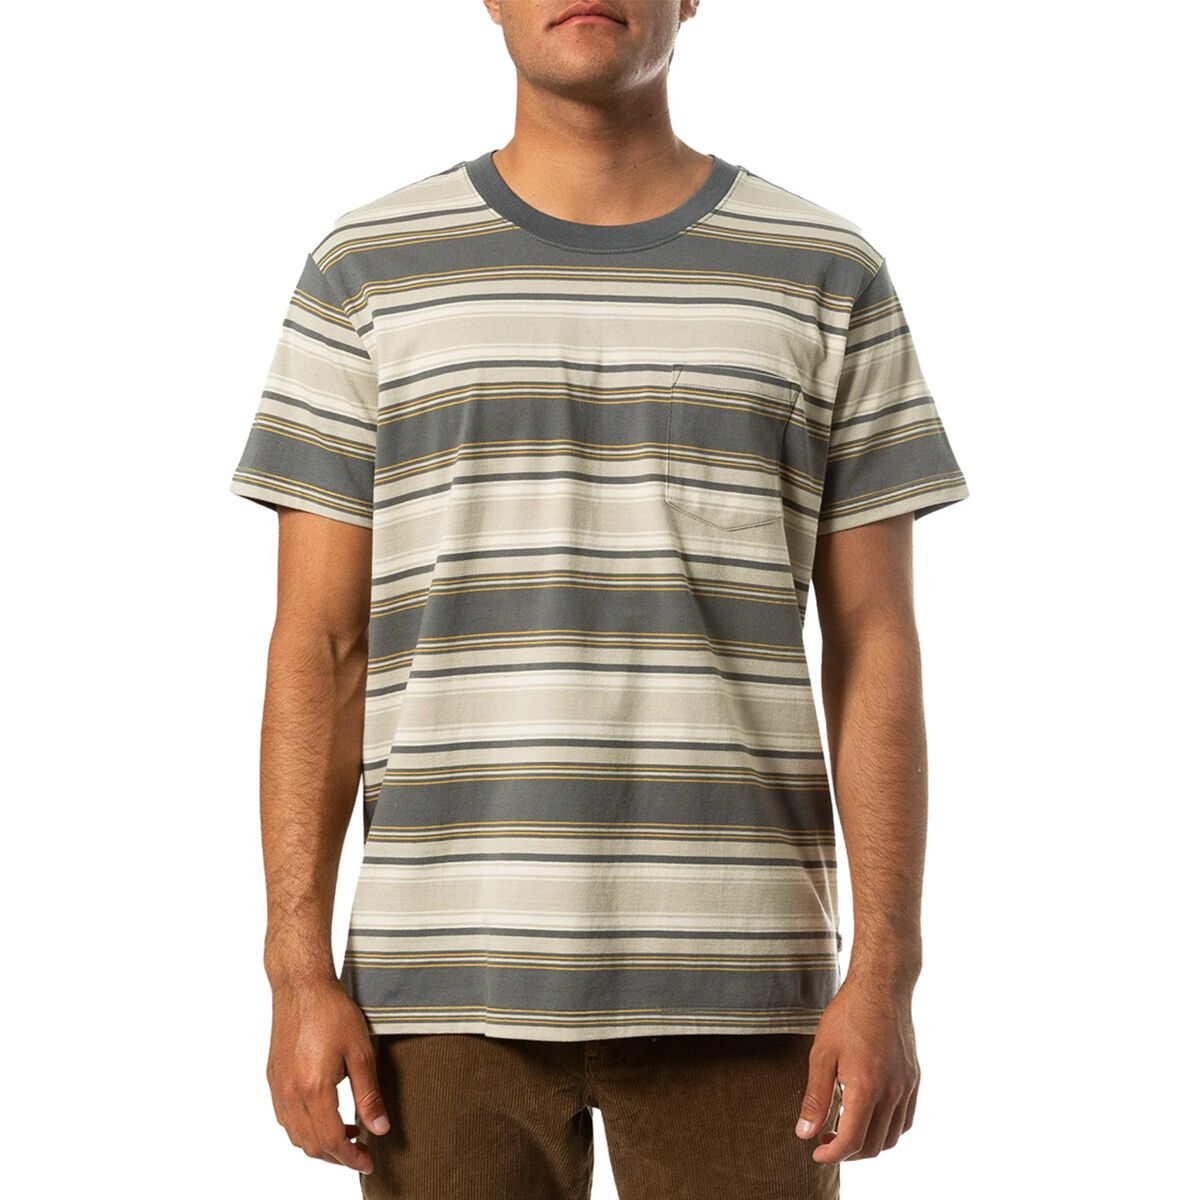 Katin Timothy Pocket T-Shirt - Men's